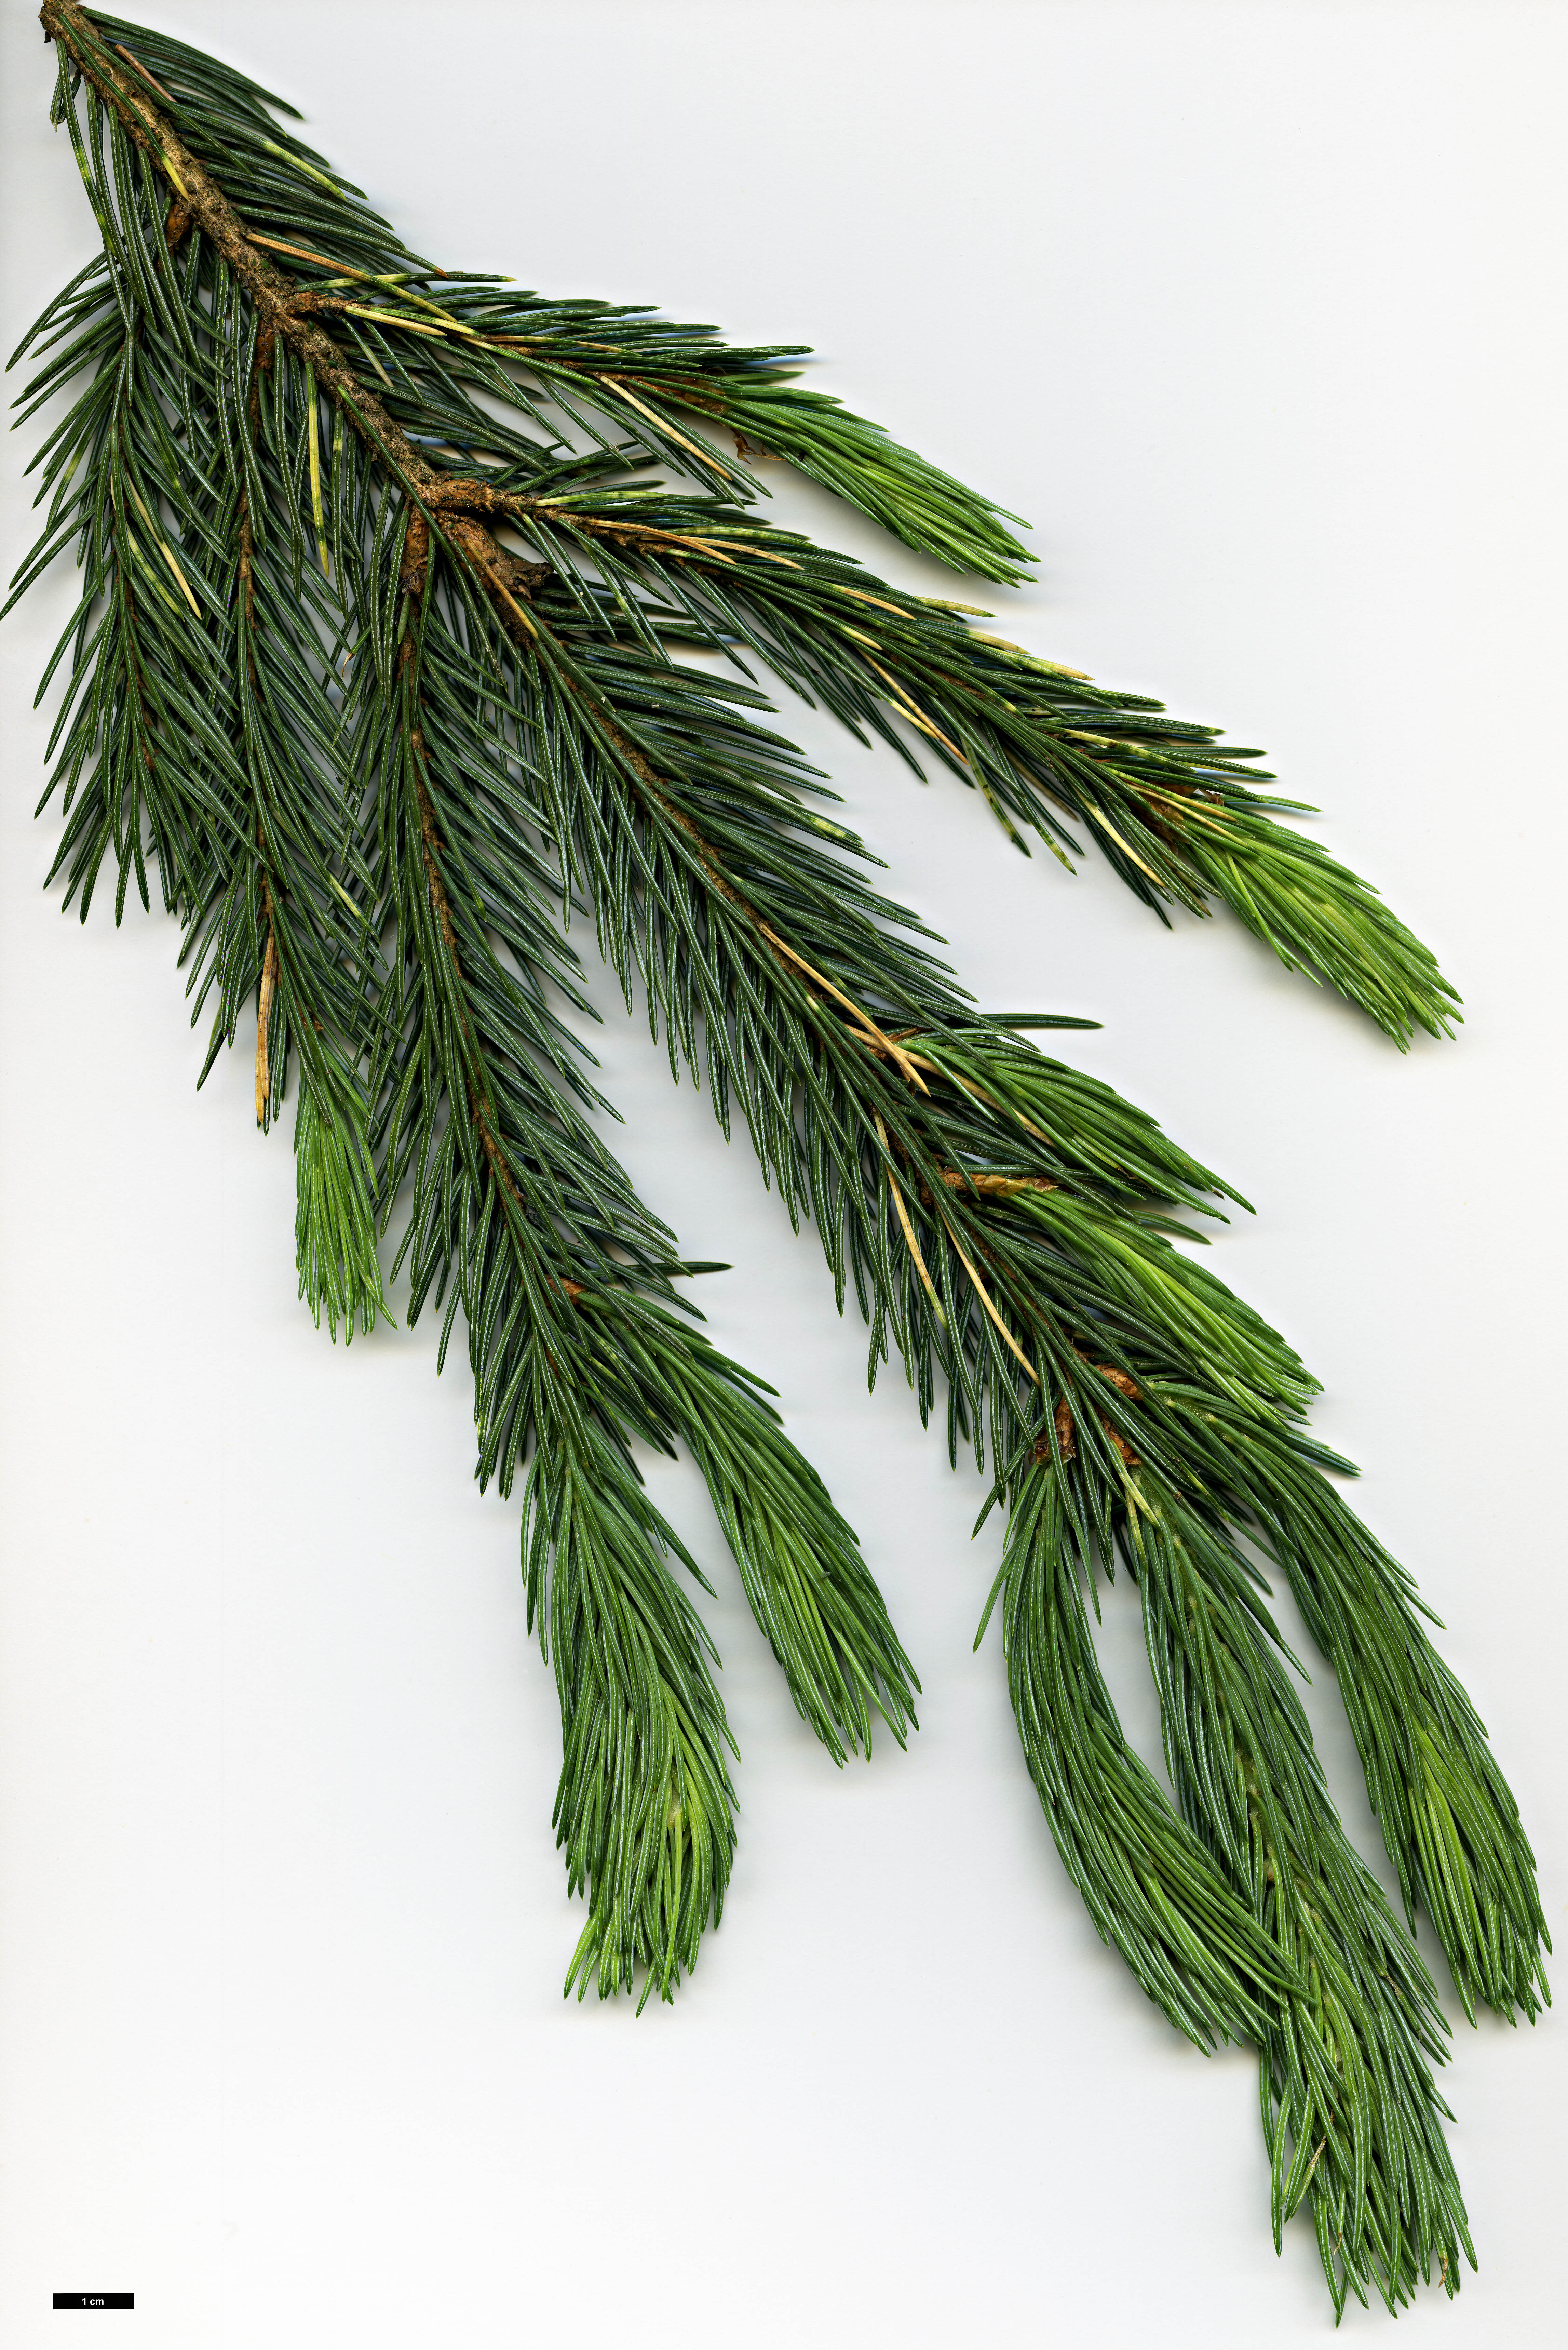 High resolution image: Family: Pinaceae - Genus: Picea - Taxon: engelmannii - SpeciesSub: subsp. mexicana 